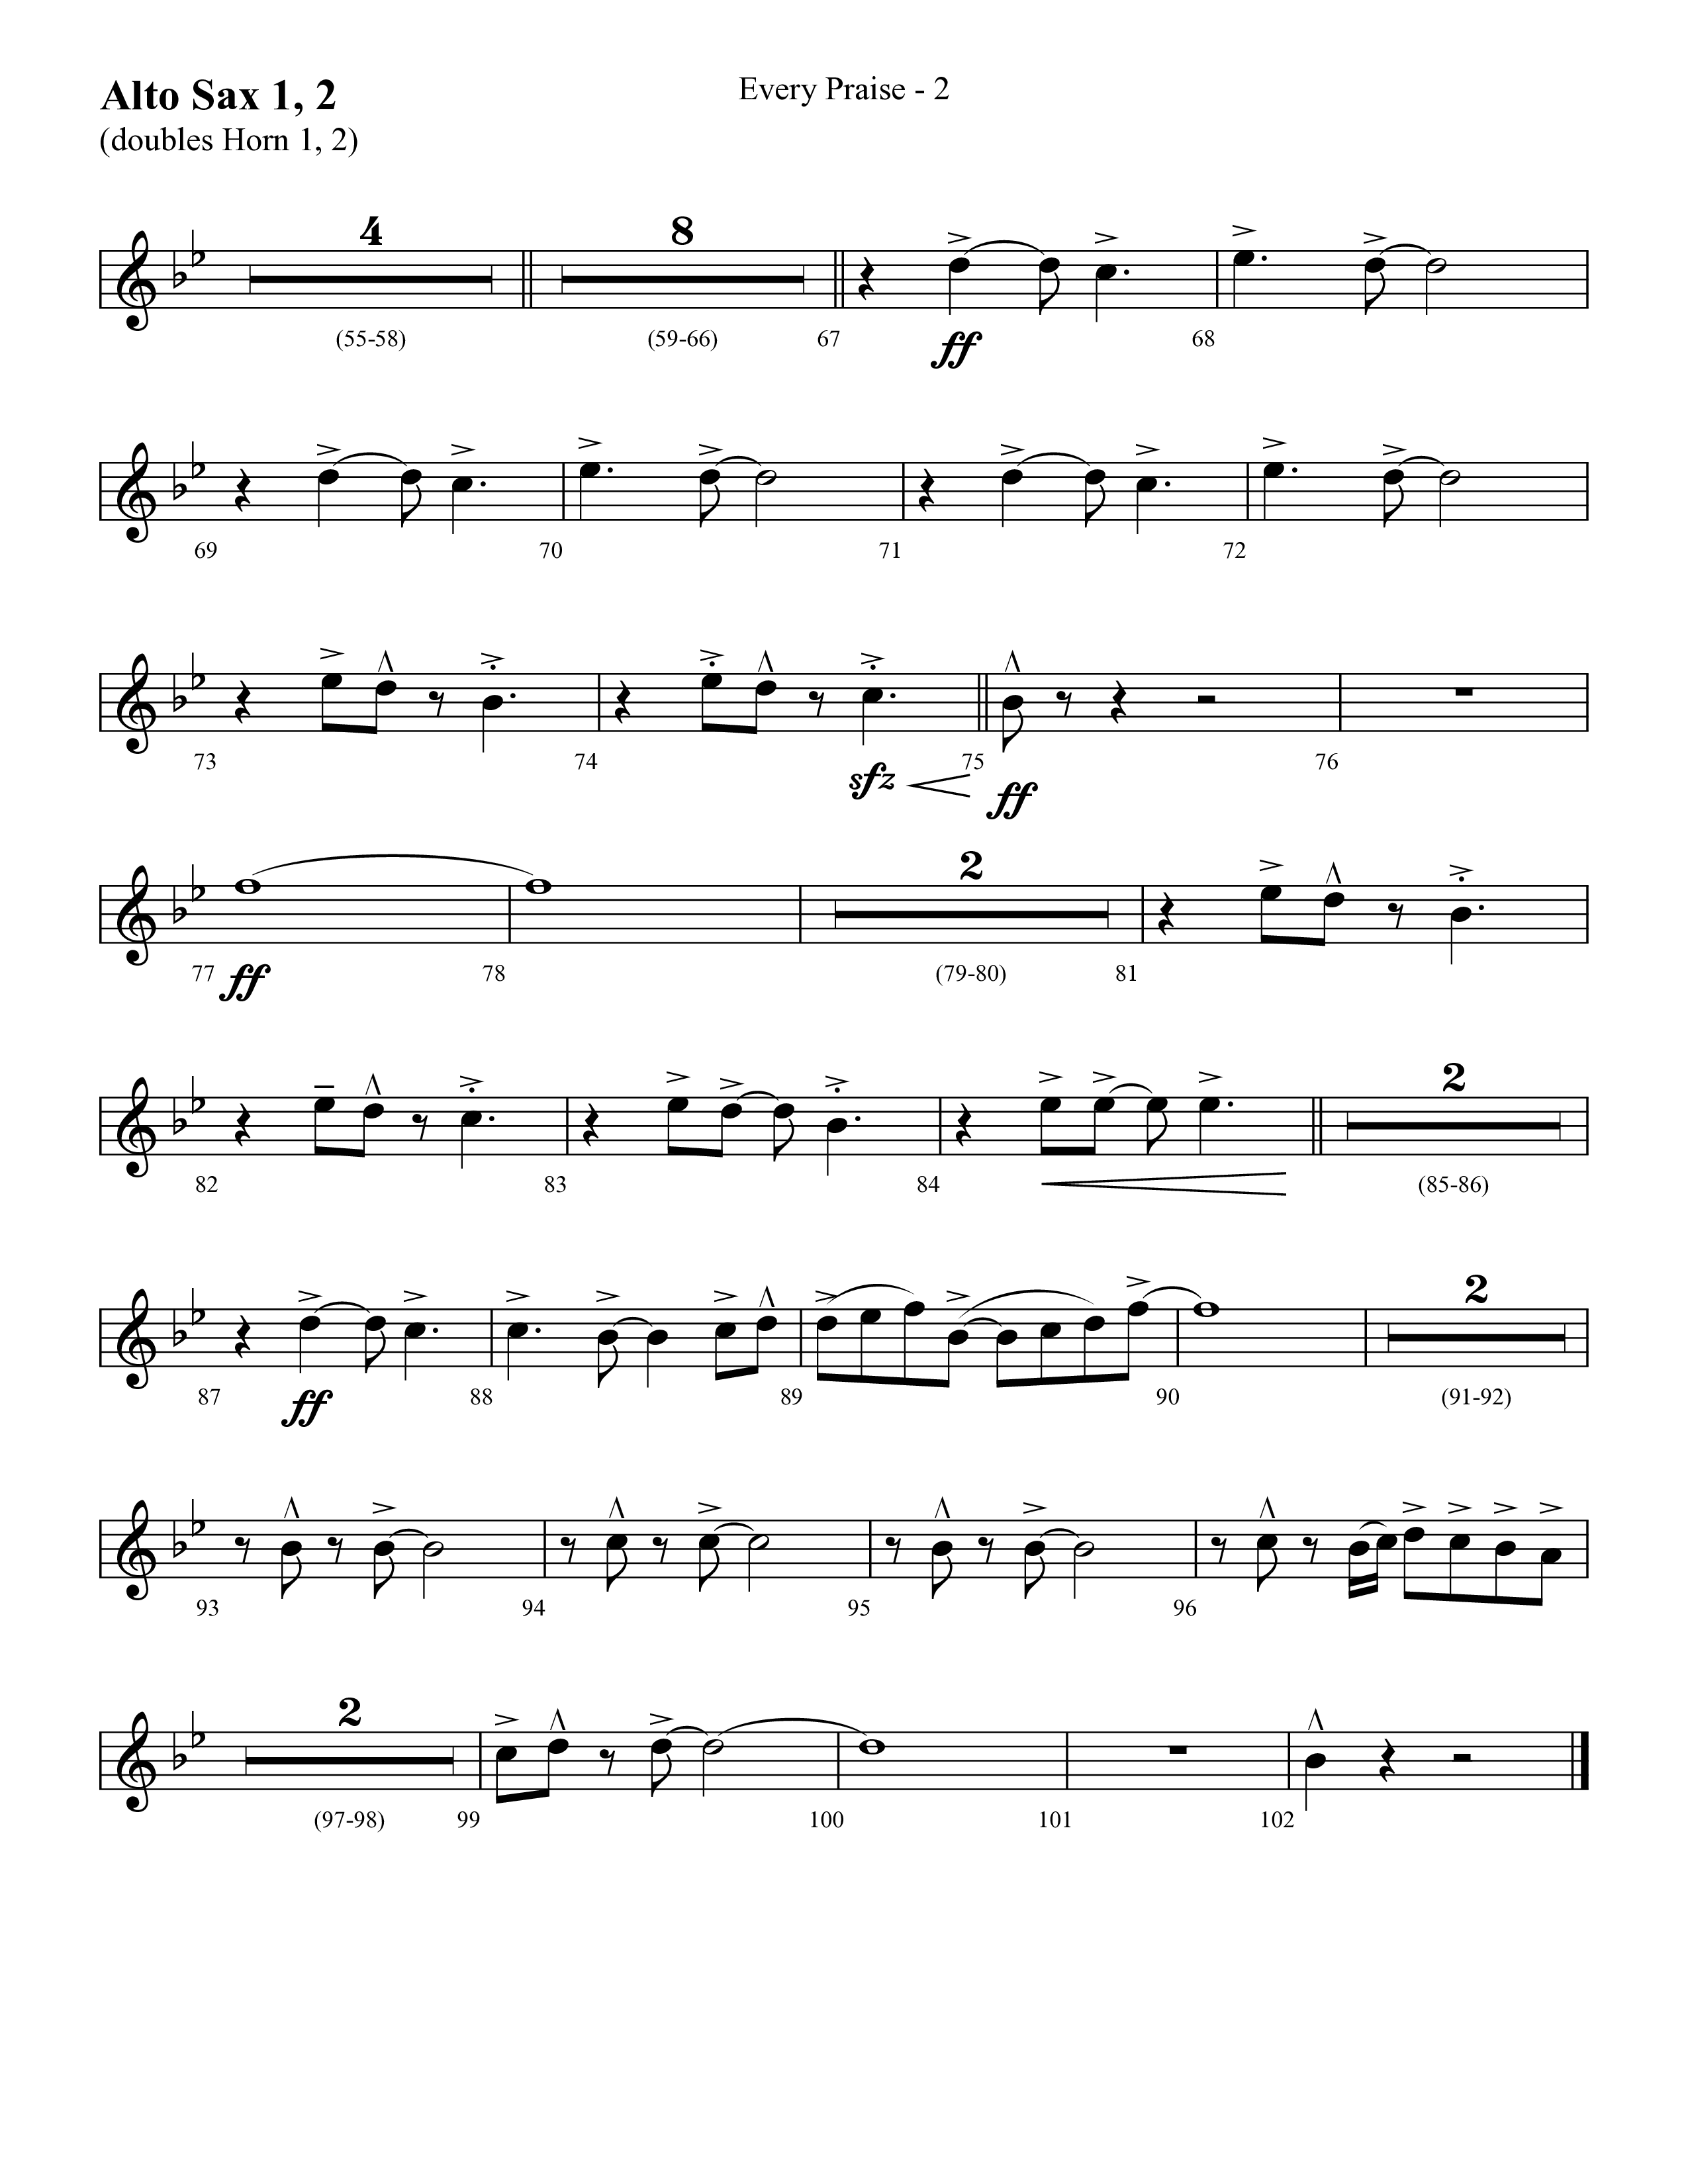 Every Praise (Choral Anthem SATB) Alto Sax 1/2 (Lifeway Choral / Arr. Cliff Duren)